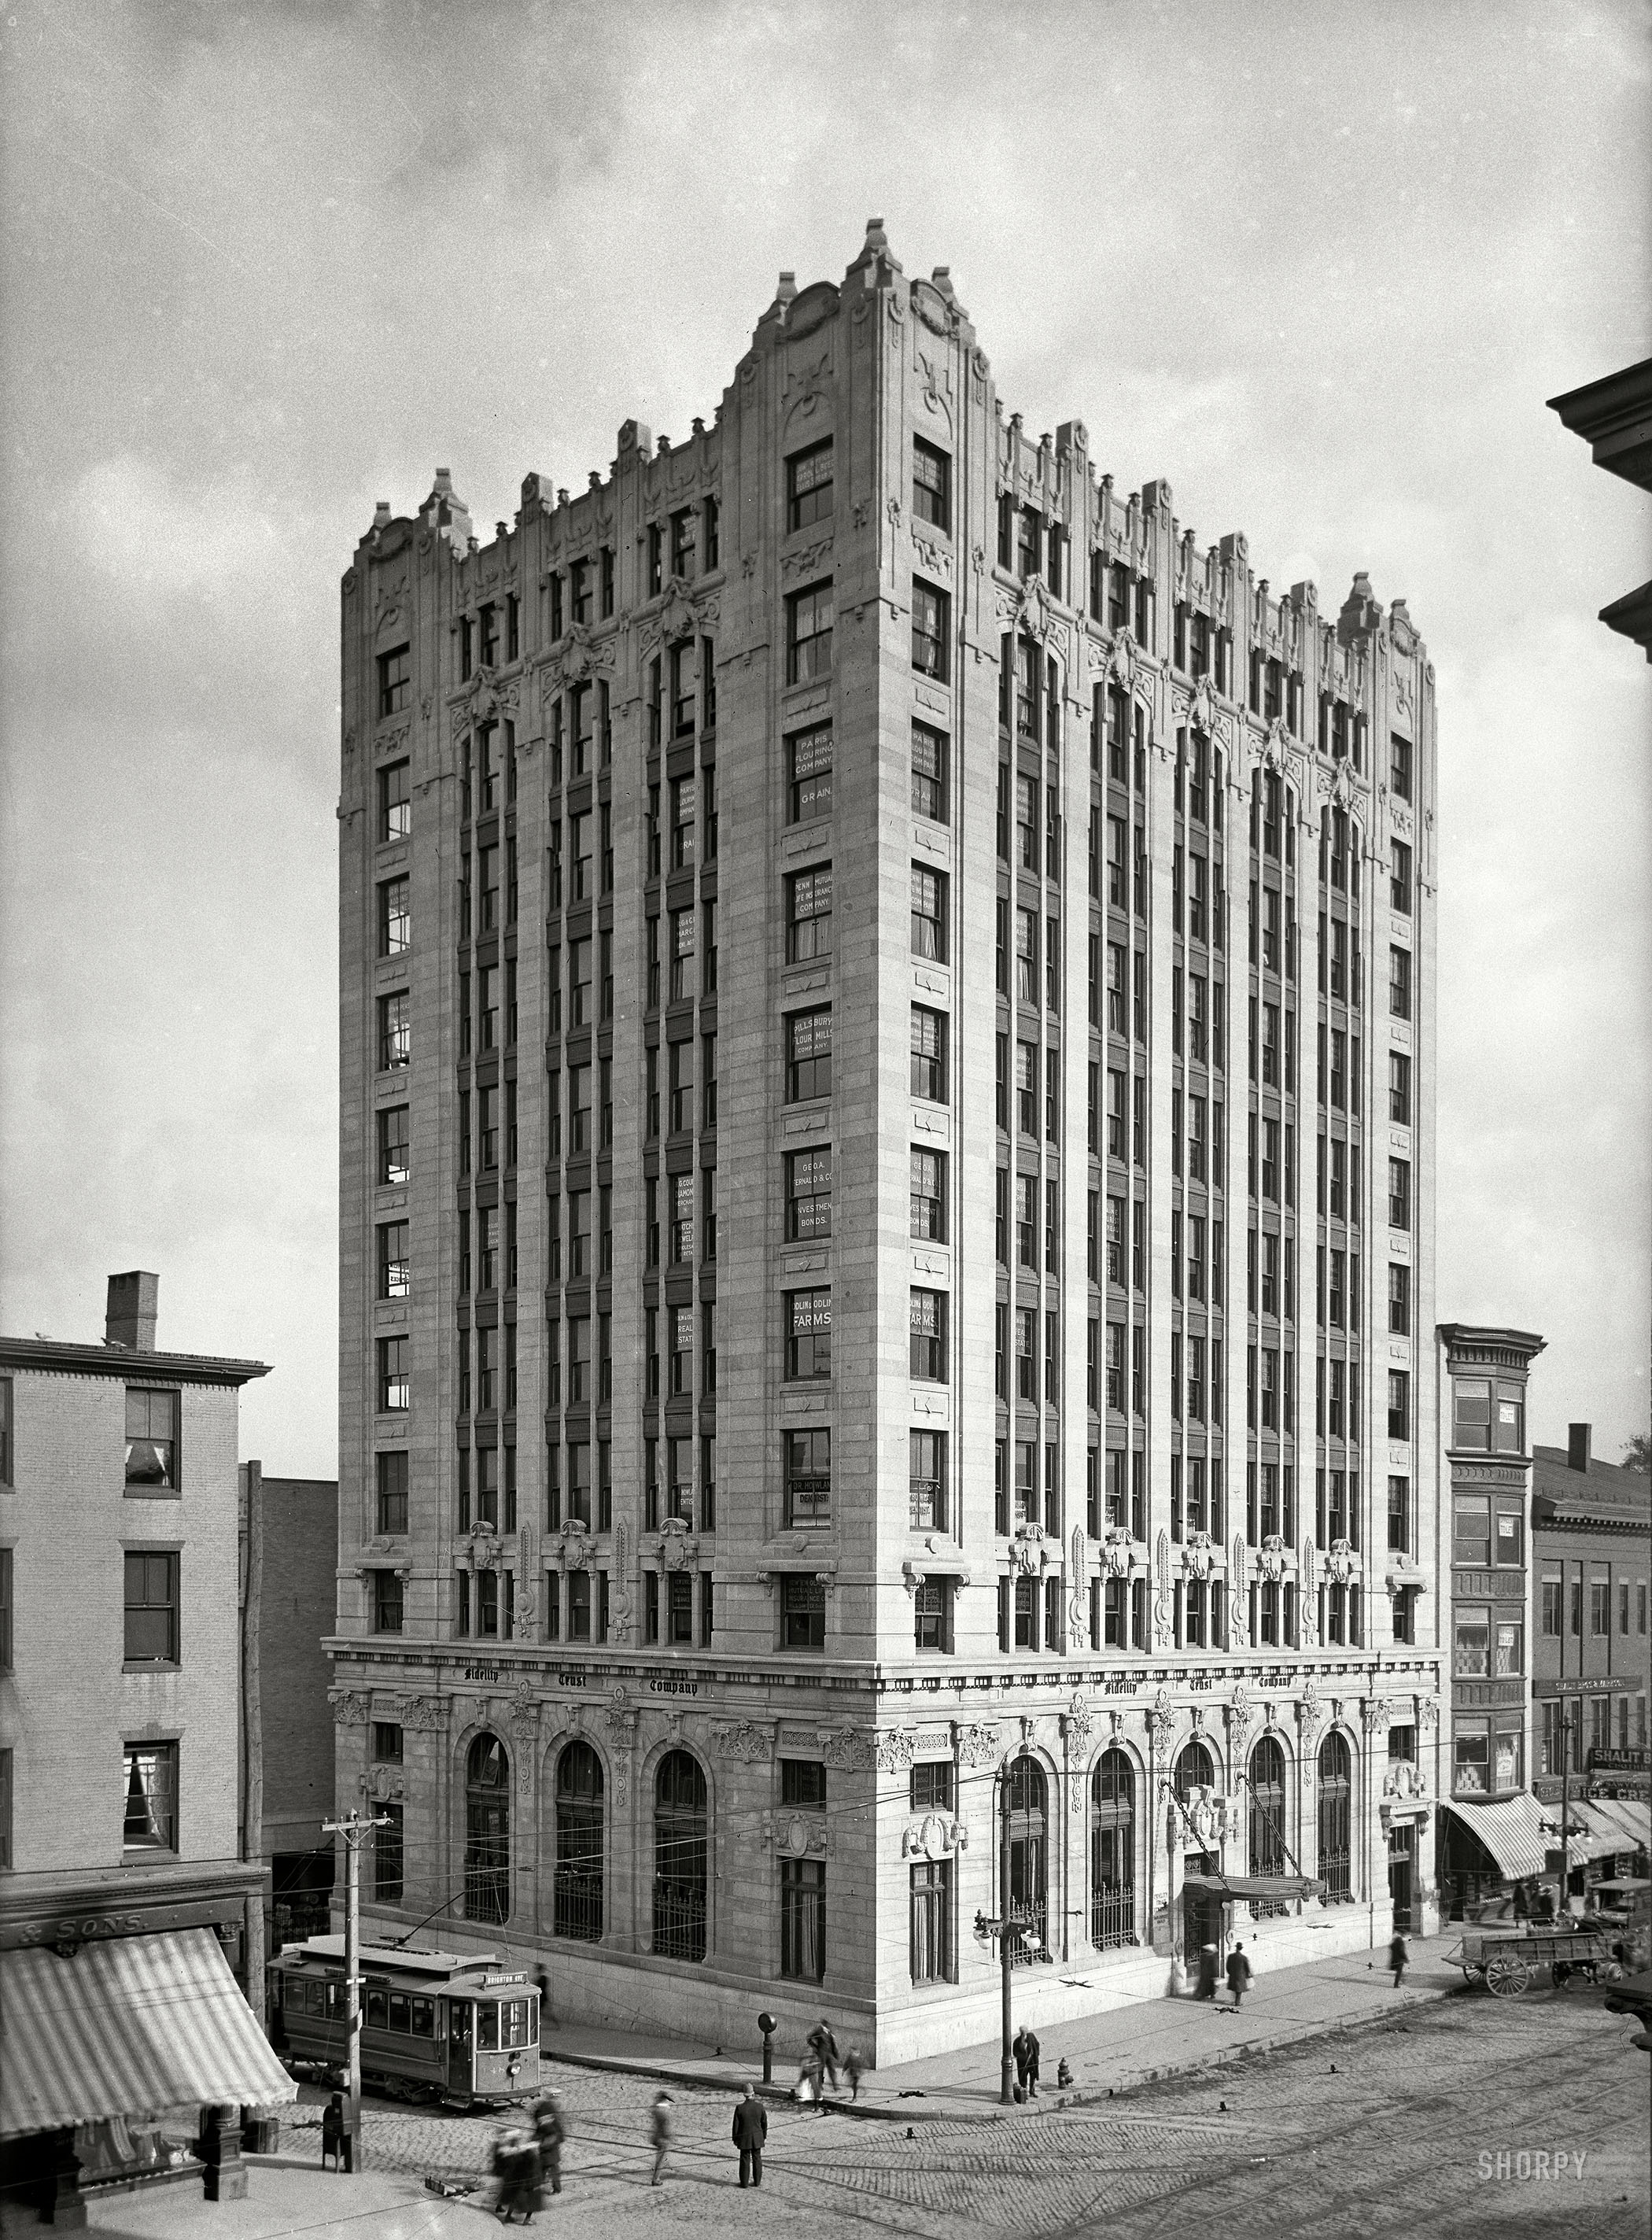 Portland, Maine, circa 1910. "Fidelity Trust building, Congress Street." 5x7 inch dry plate glass negative, Detroit Publishing Company. View full size.